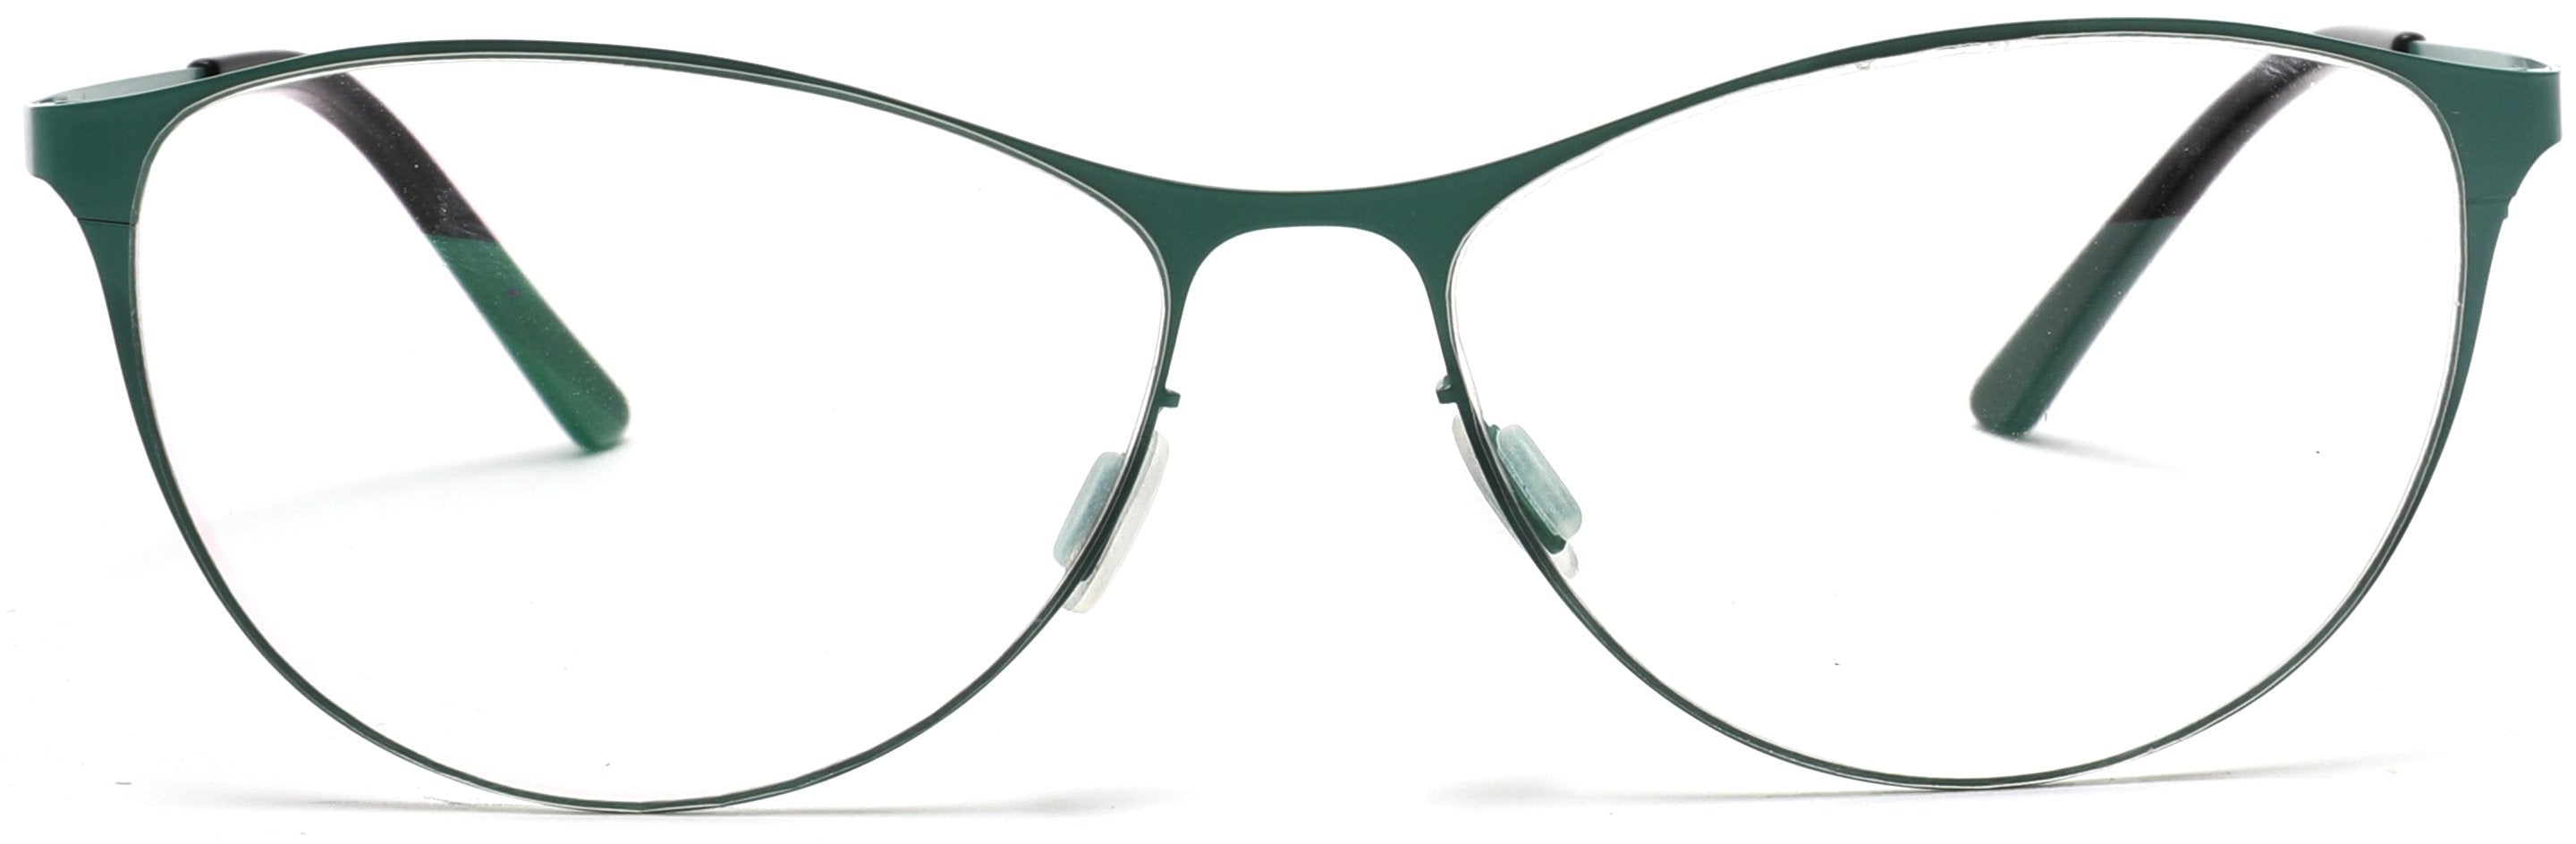 Tango Optics Metal Cateye Optical Eyeglasses Frame Flexible Stainless Steel Green For Prescription Lens-Samba Shades